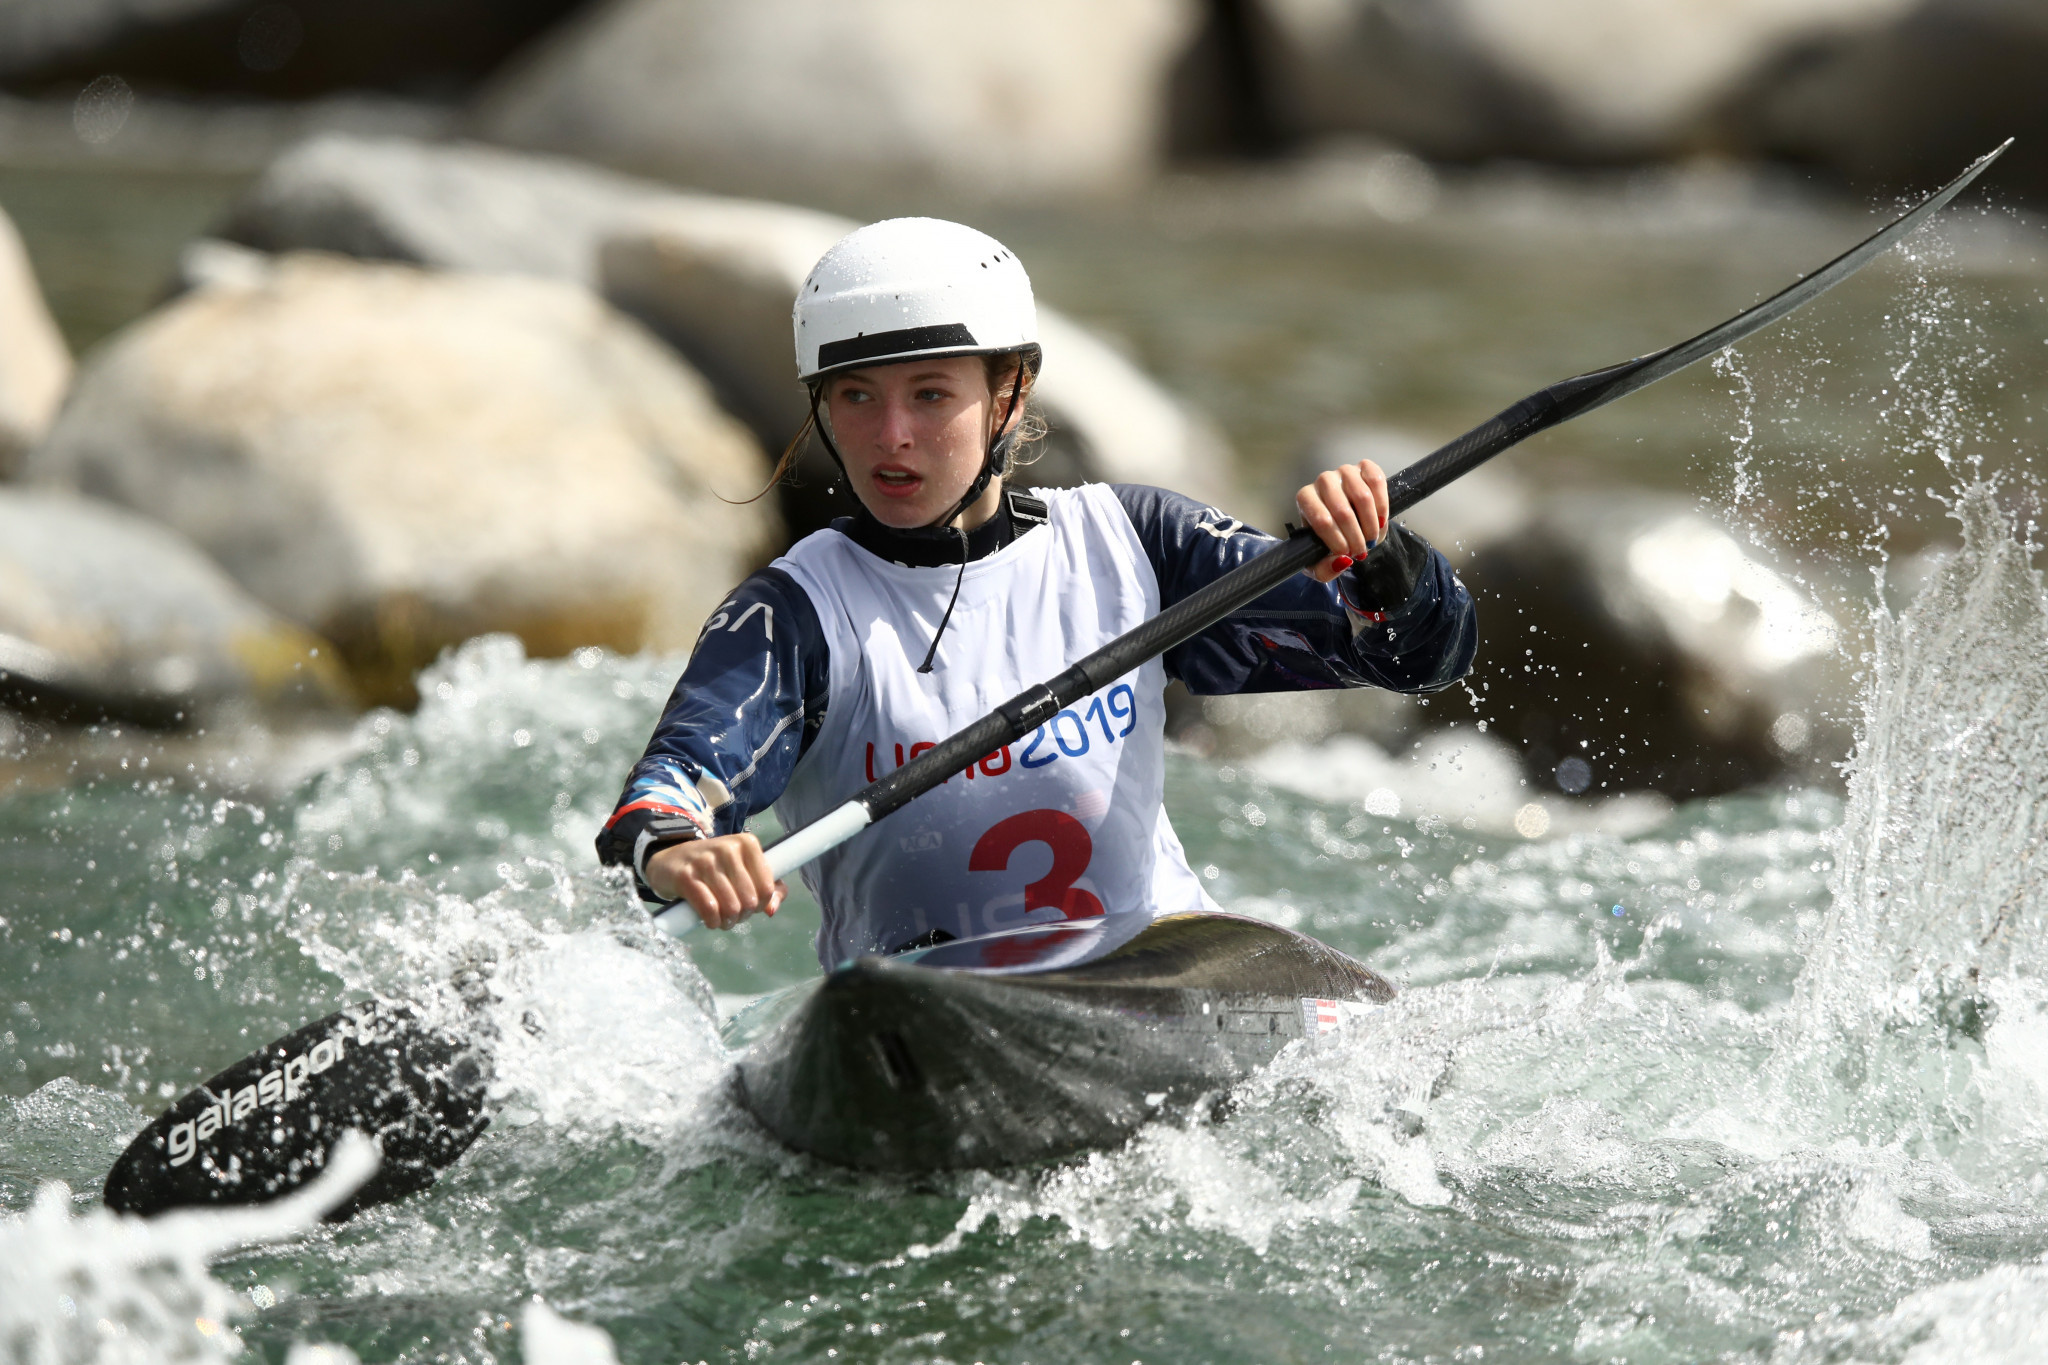 Teenagers Leibfarth and Joseph star in heats of ICF Canoe Slalom World Cup